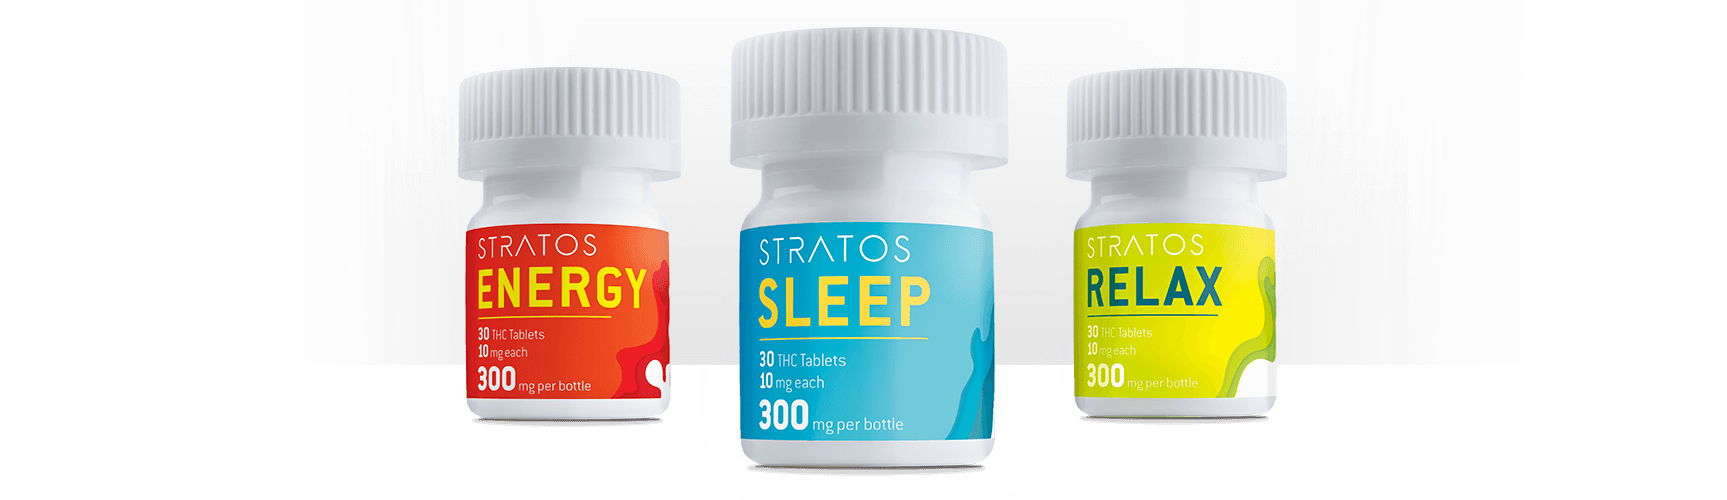 edible-stratos-energy-2c-relax-2c-sleep-pills-100mg-tax-included